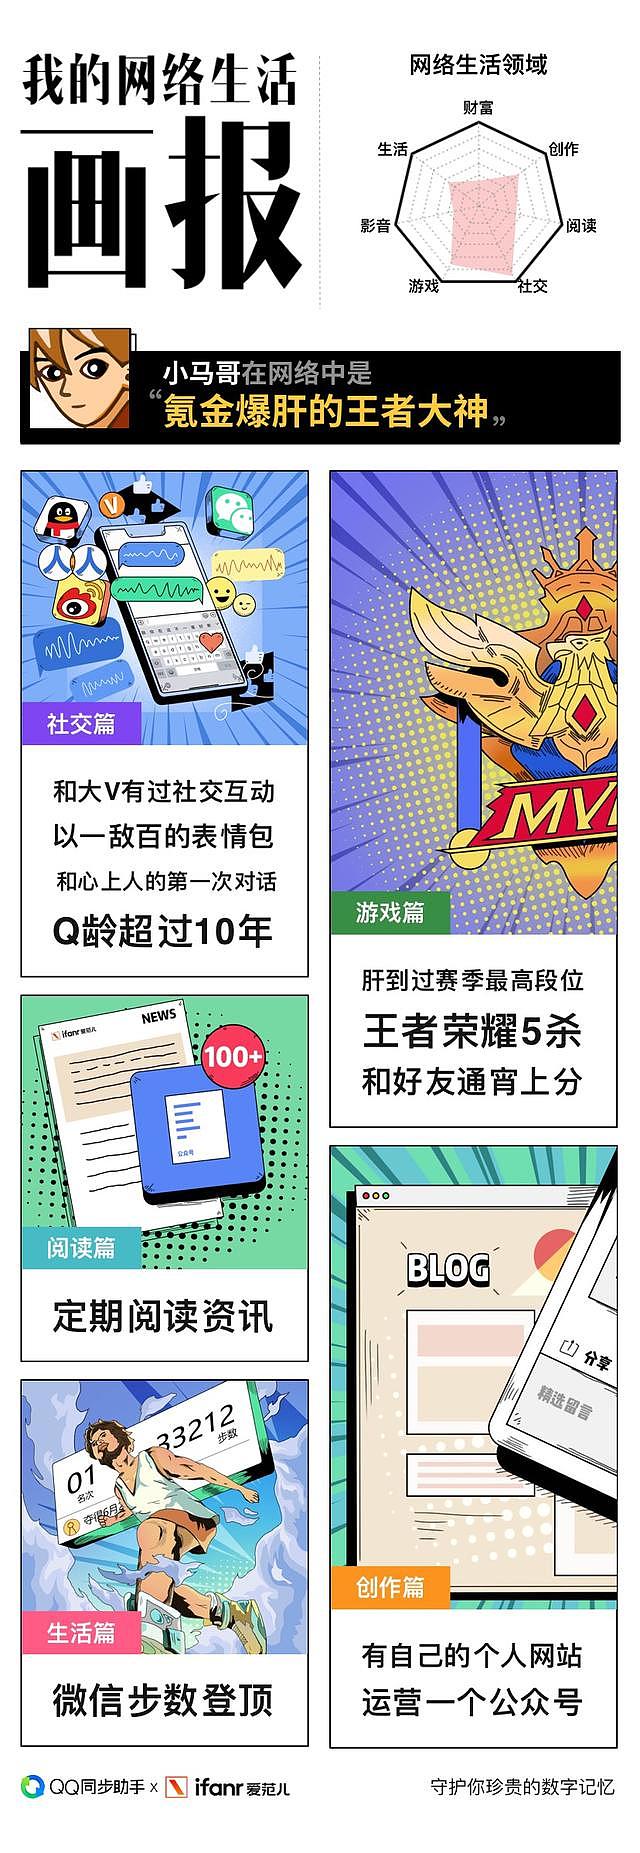 QQ 同步助手 x 爱范儿联合推出「我的网络生活画报」活动